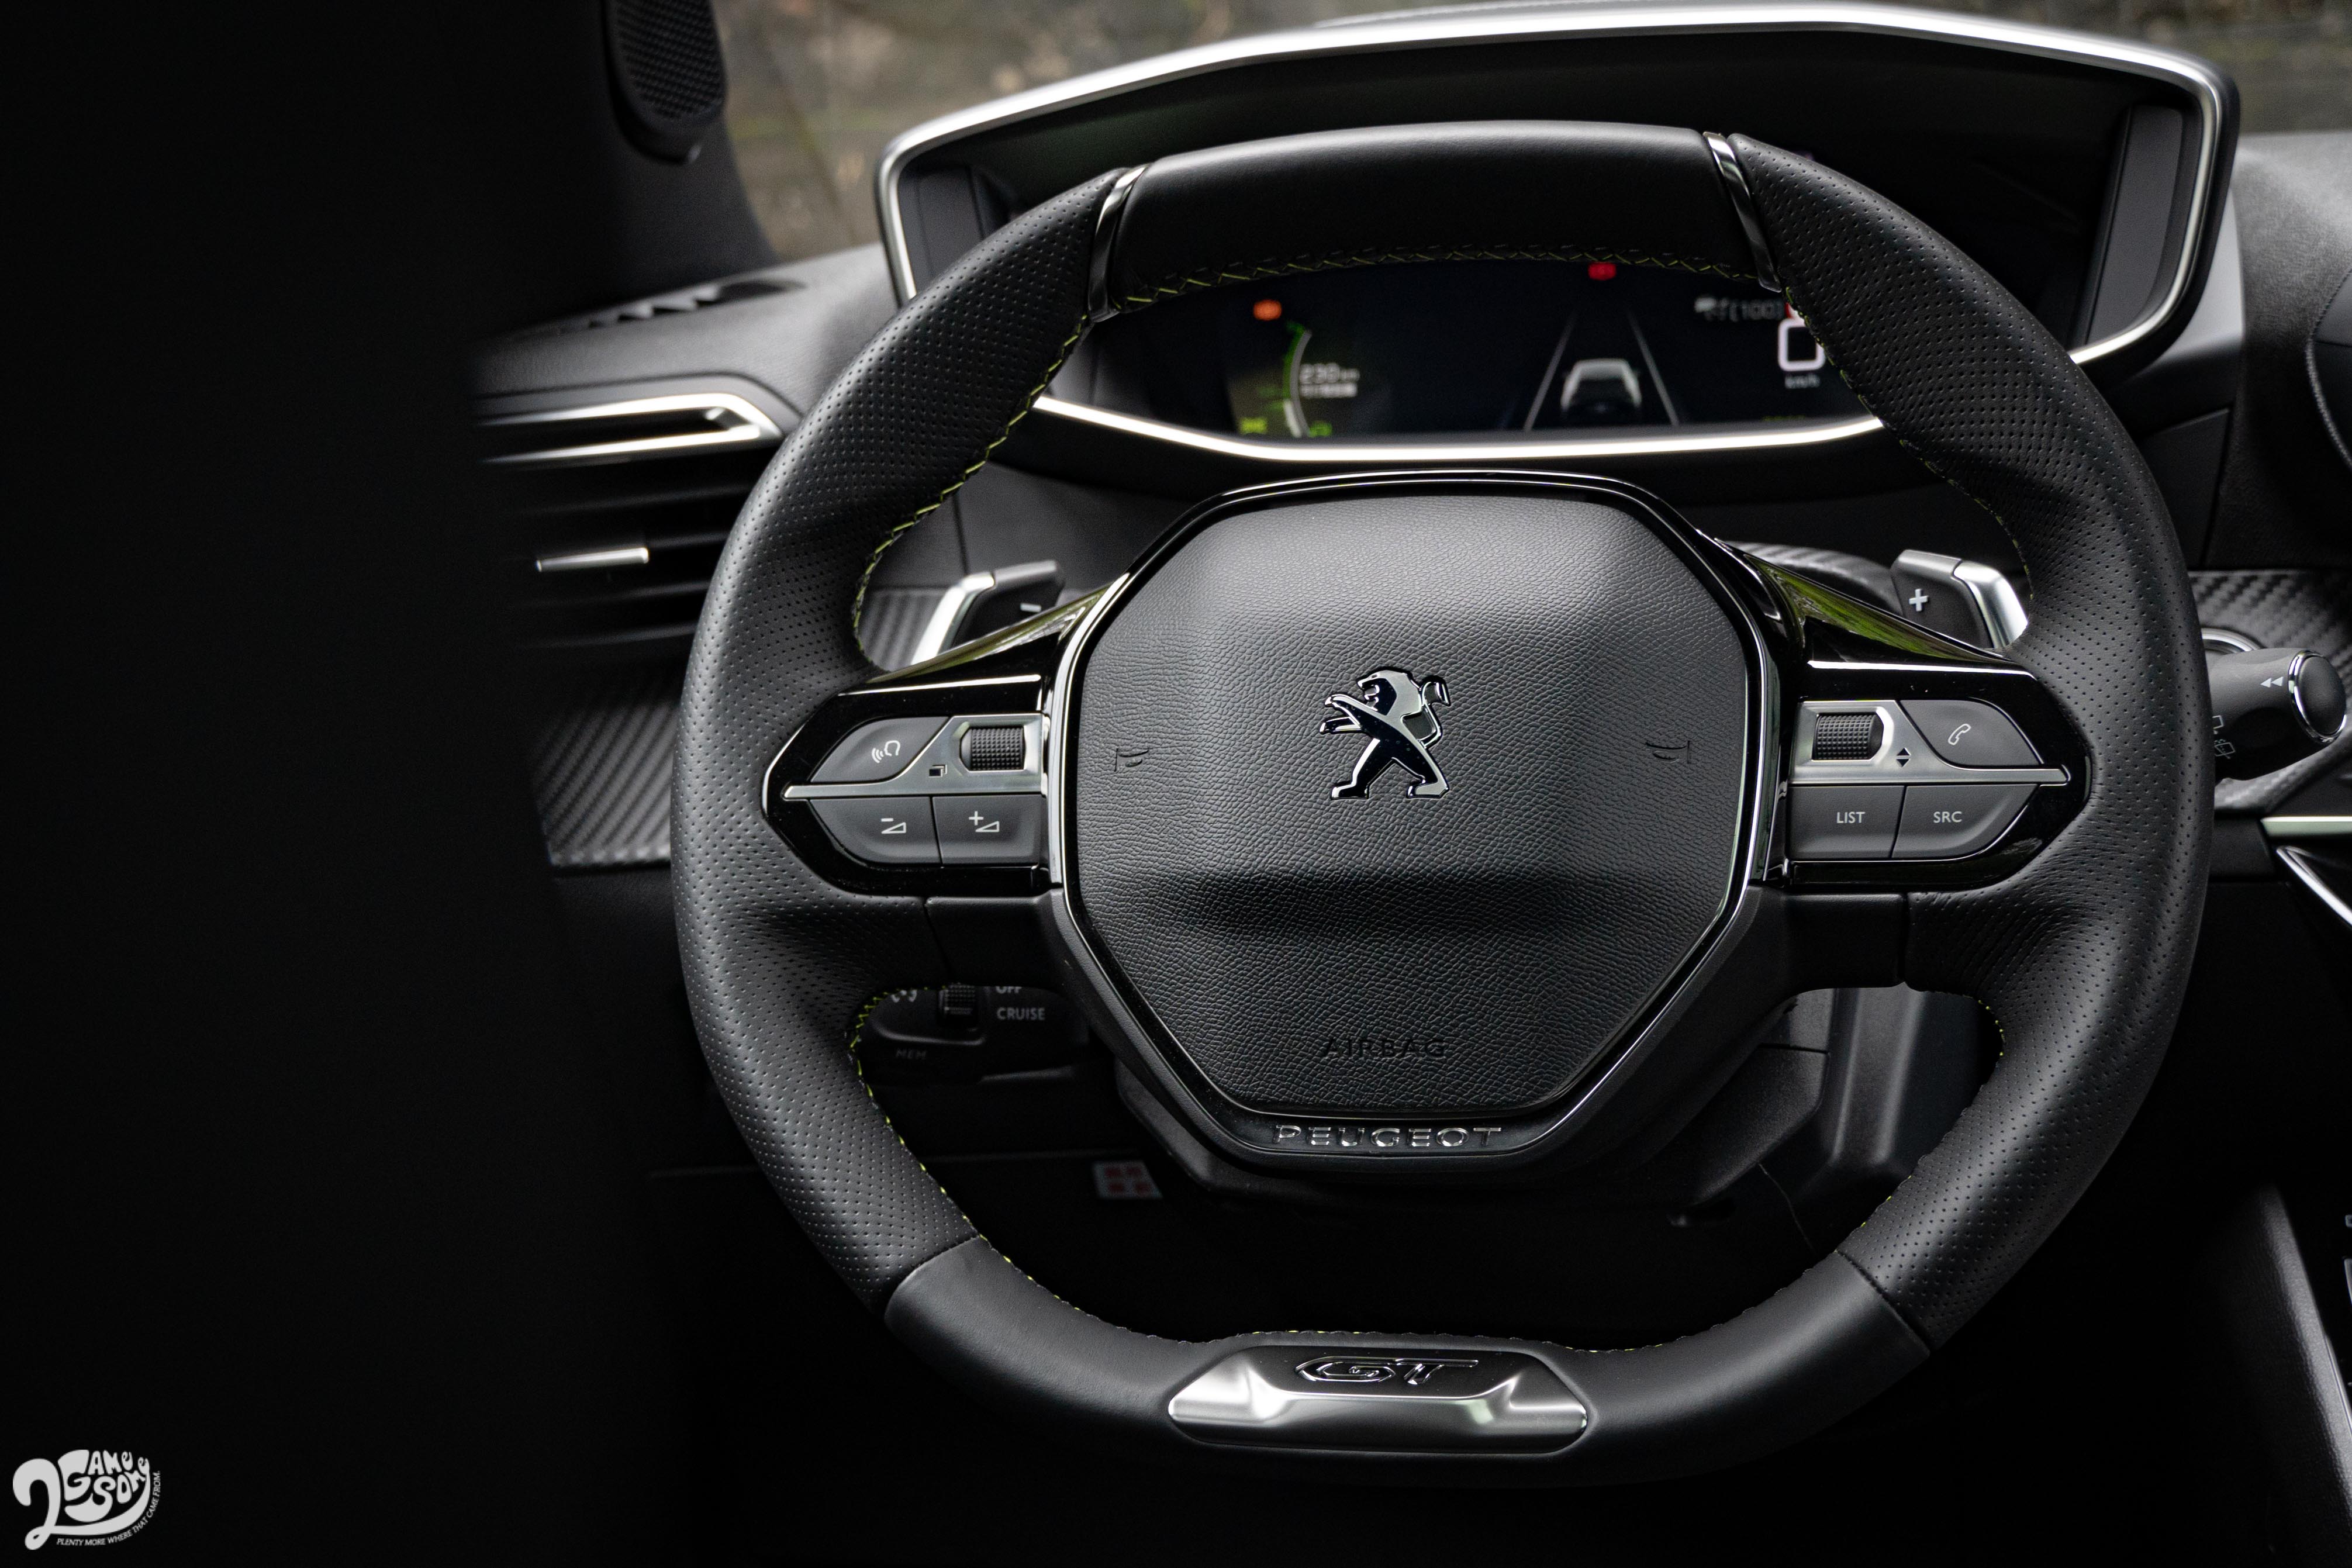 Peugeot 一貫的小盤徑方向盤標配換檔撥桿。